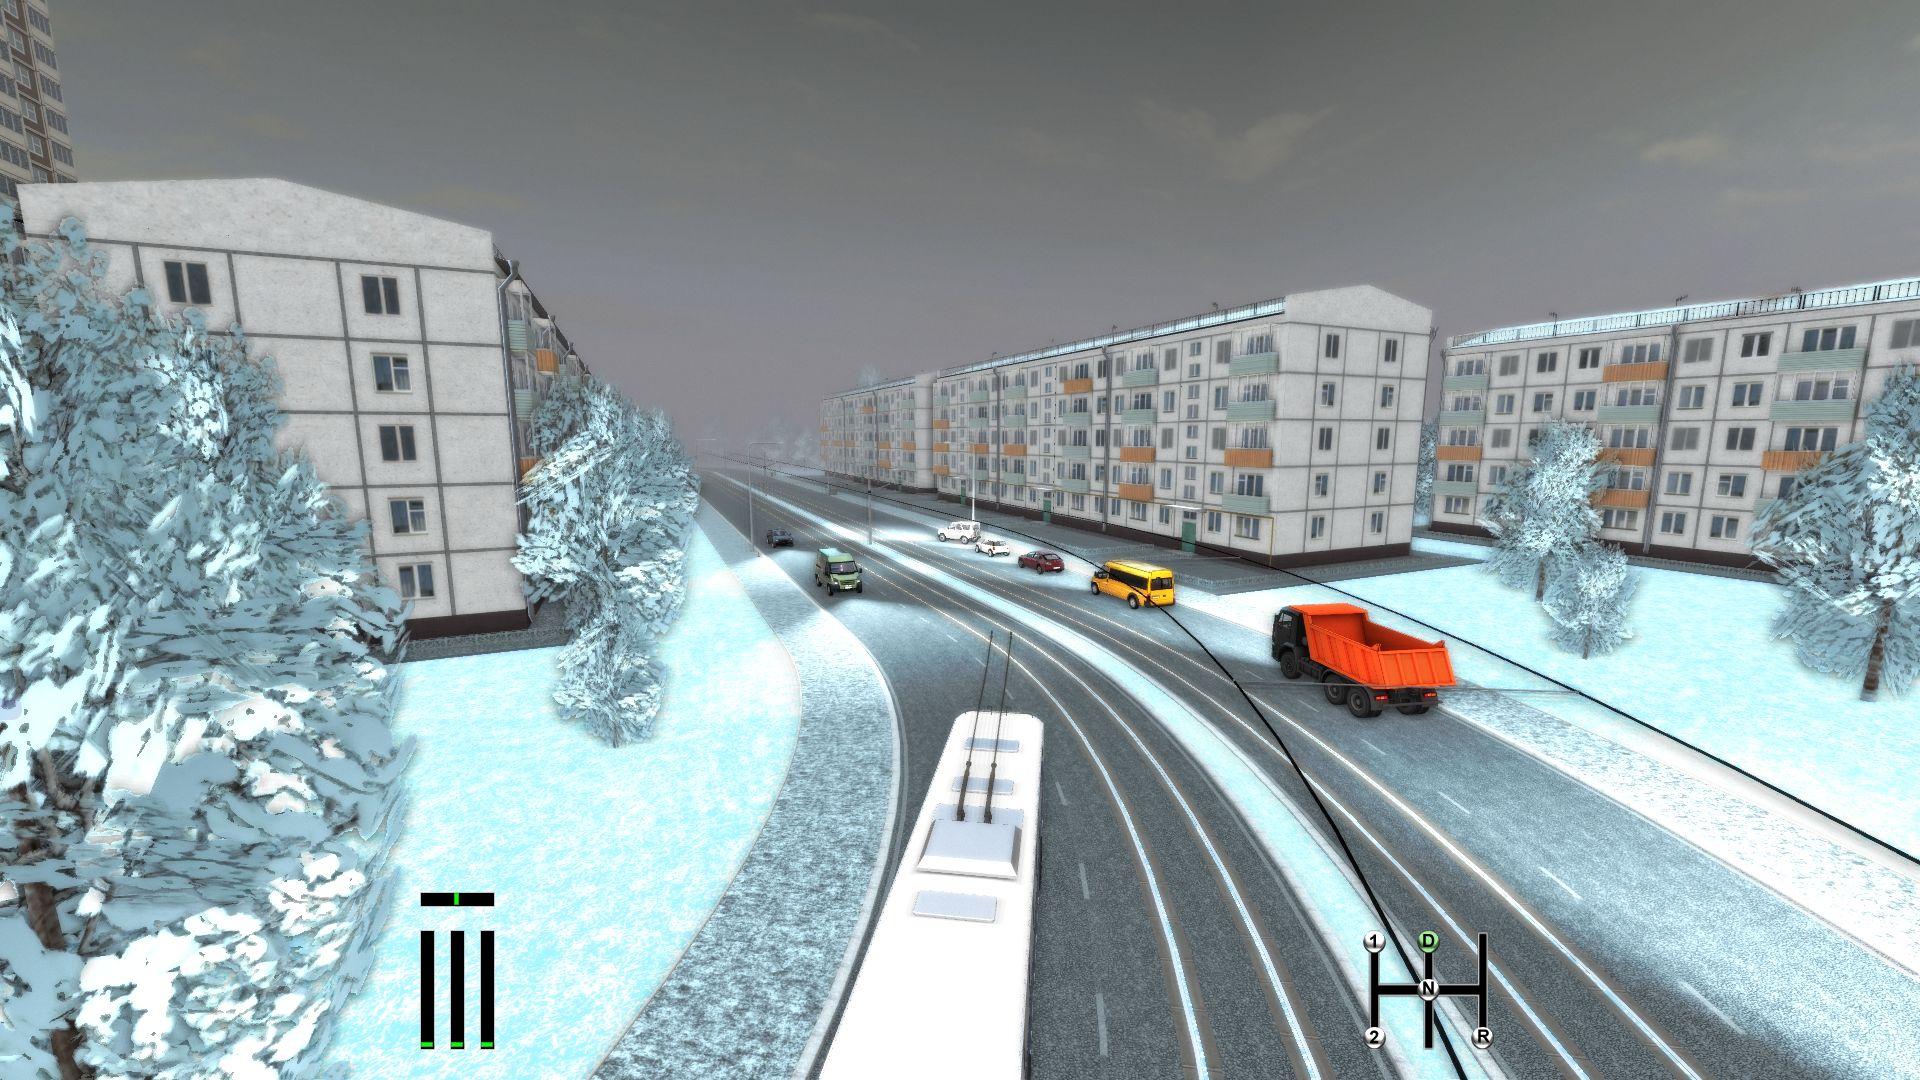 Screenshot №12 from game Drive Megapolis